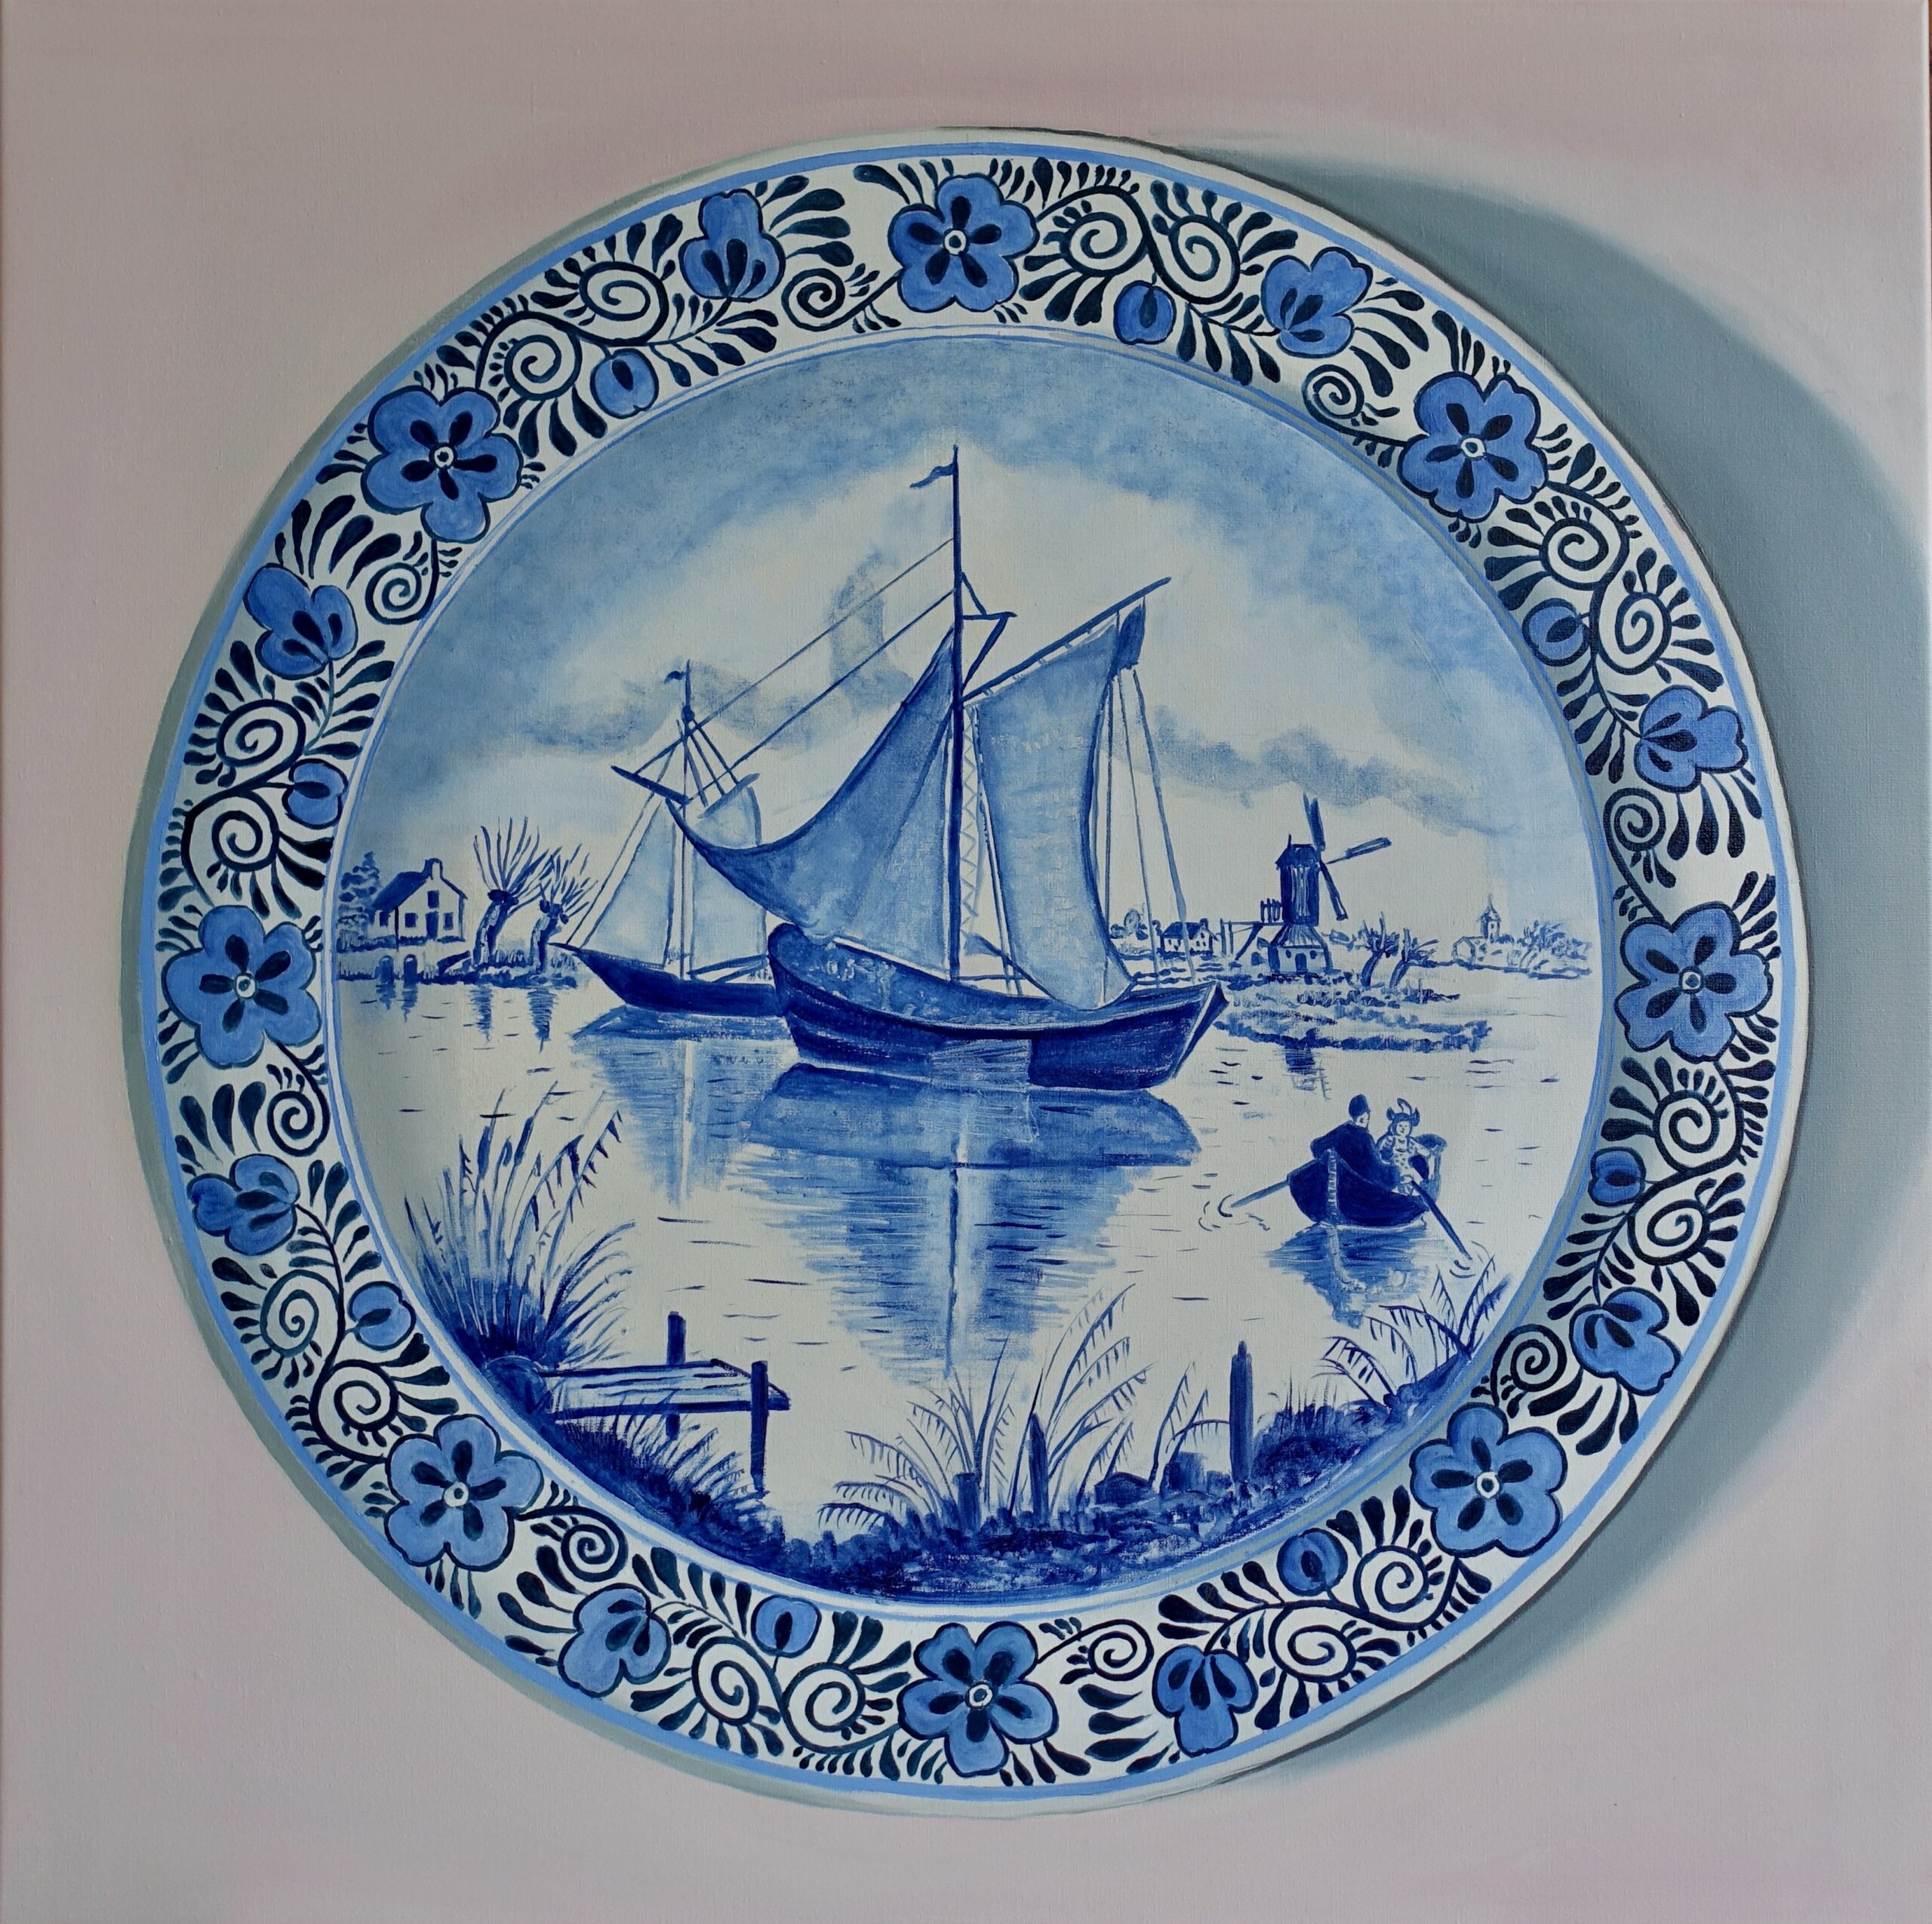 Kunst: Flushing – Delft Blue Plate van kunstenaar Minke Buikema